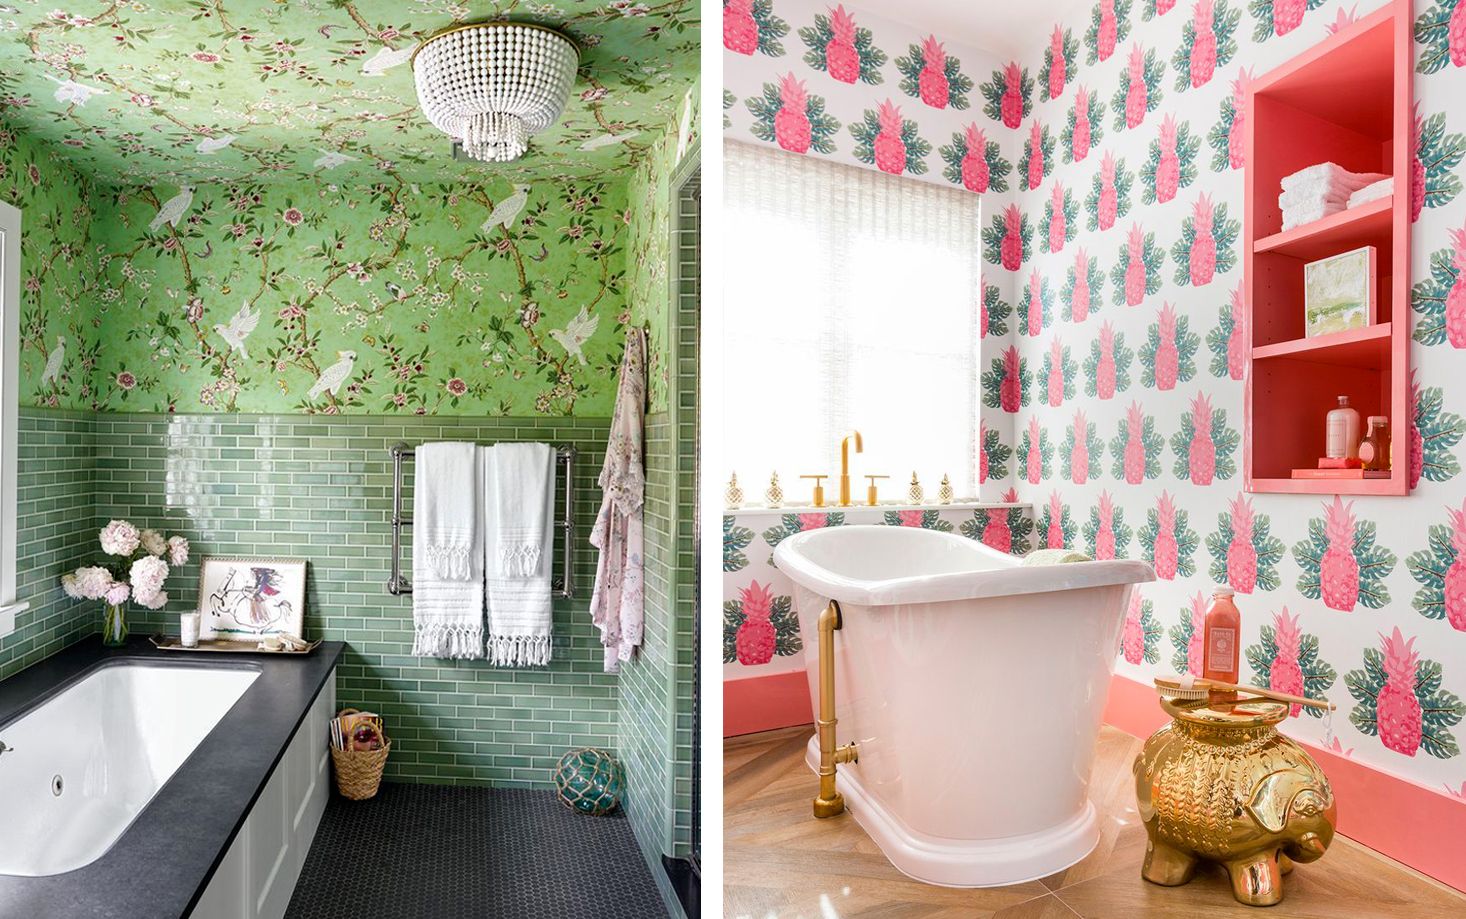 Free download Best Bathroom Wallpaper Ideas 22 Beautiful